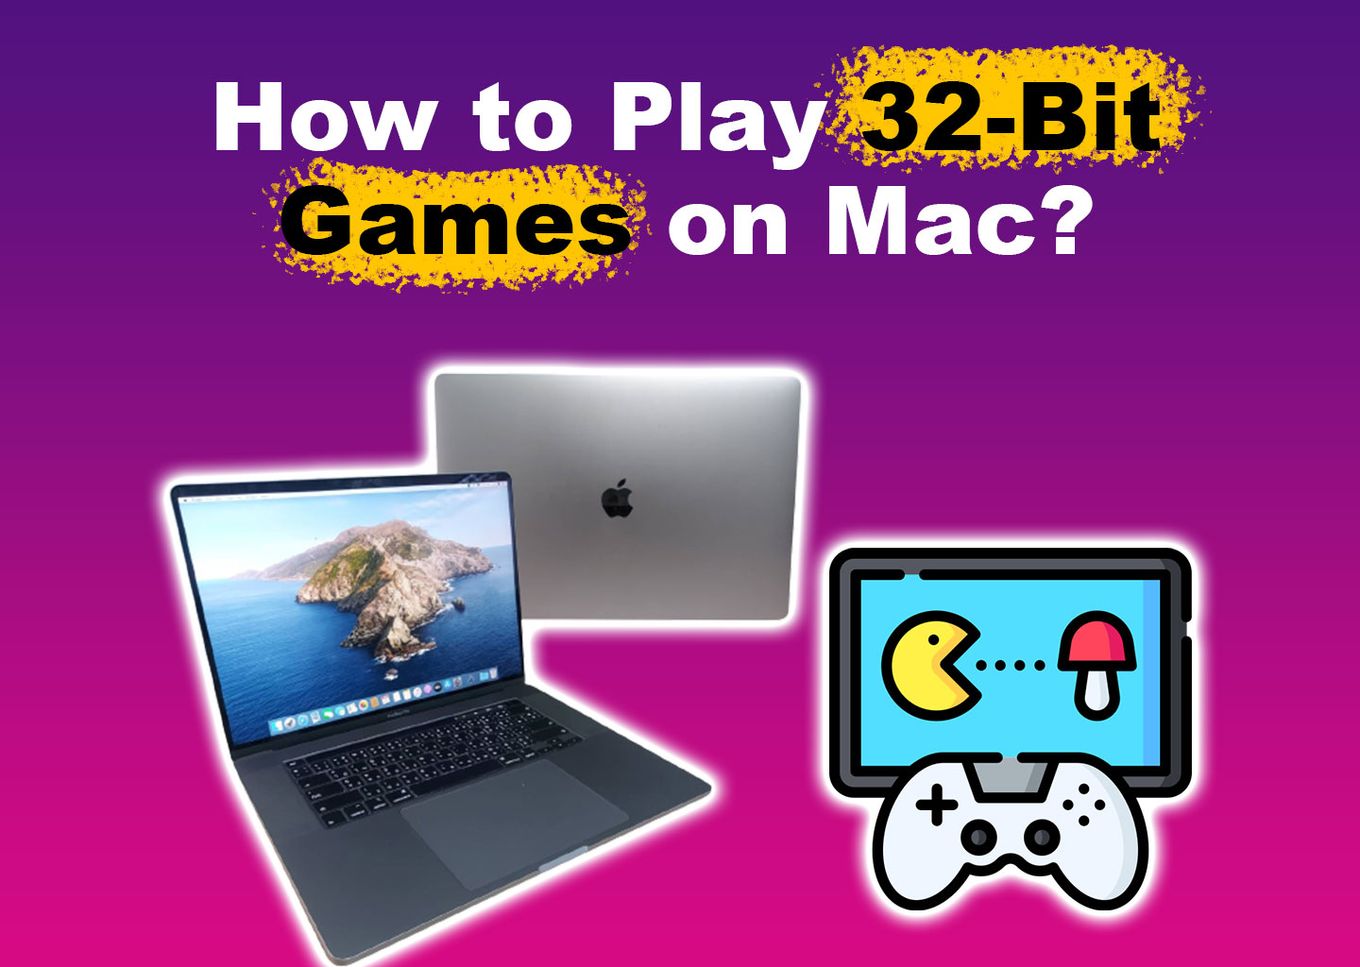 Cool Mac Games Free Download